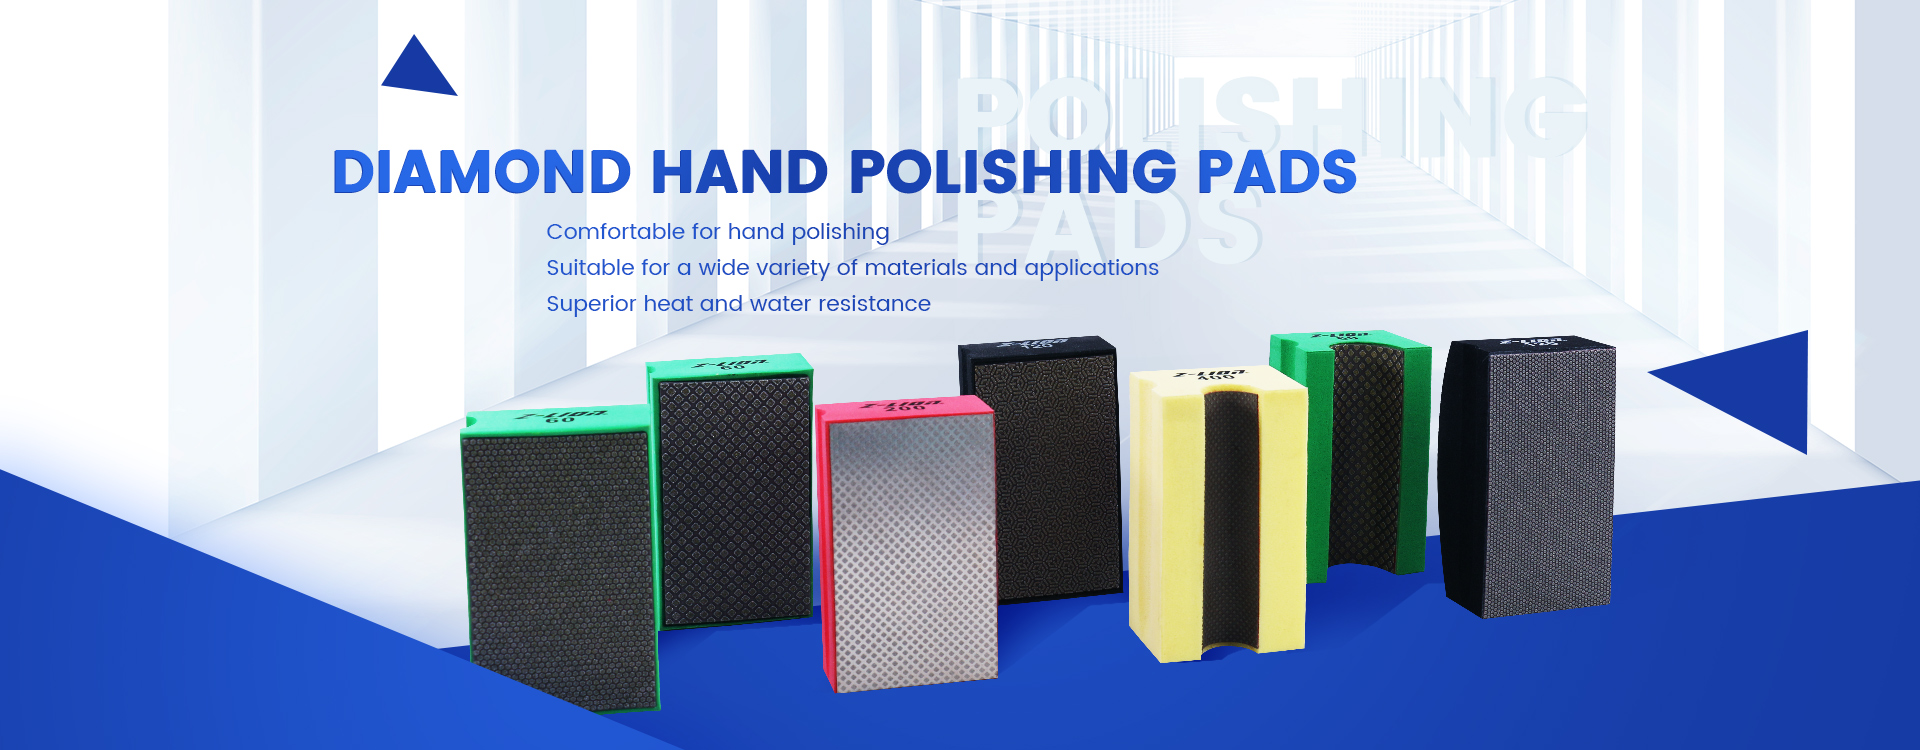 diamond hand polishing pads